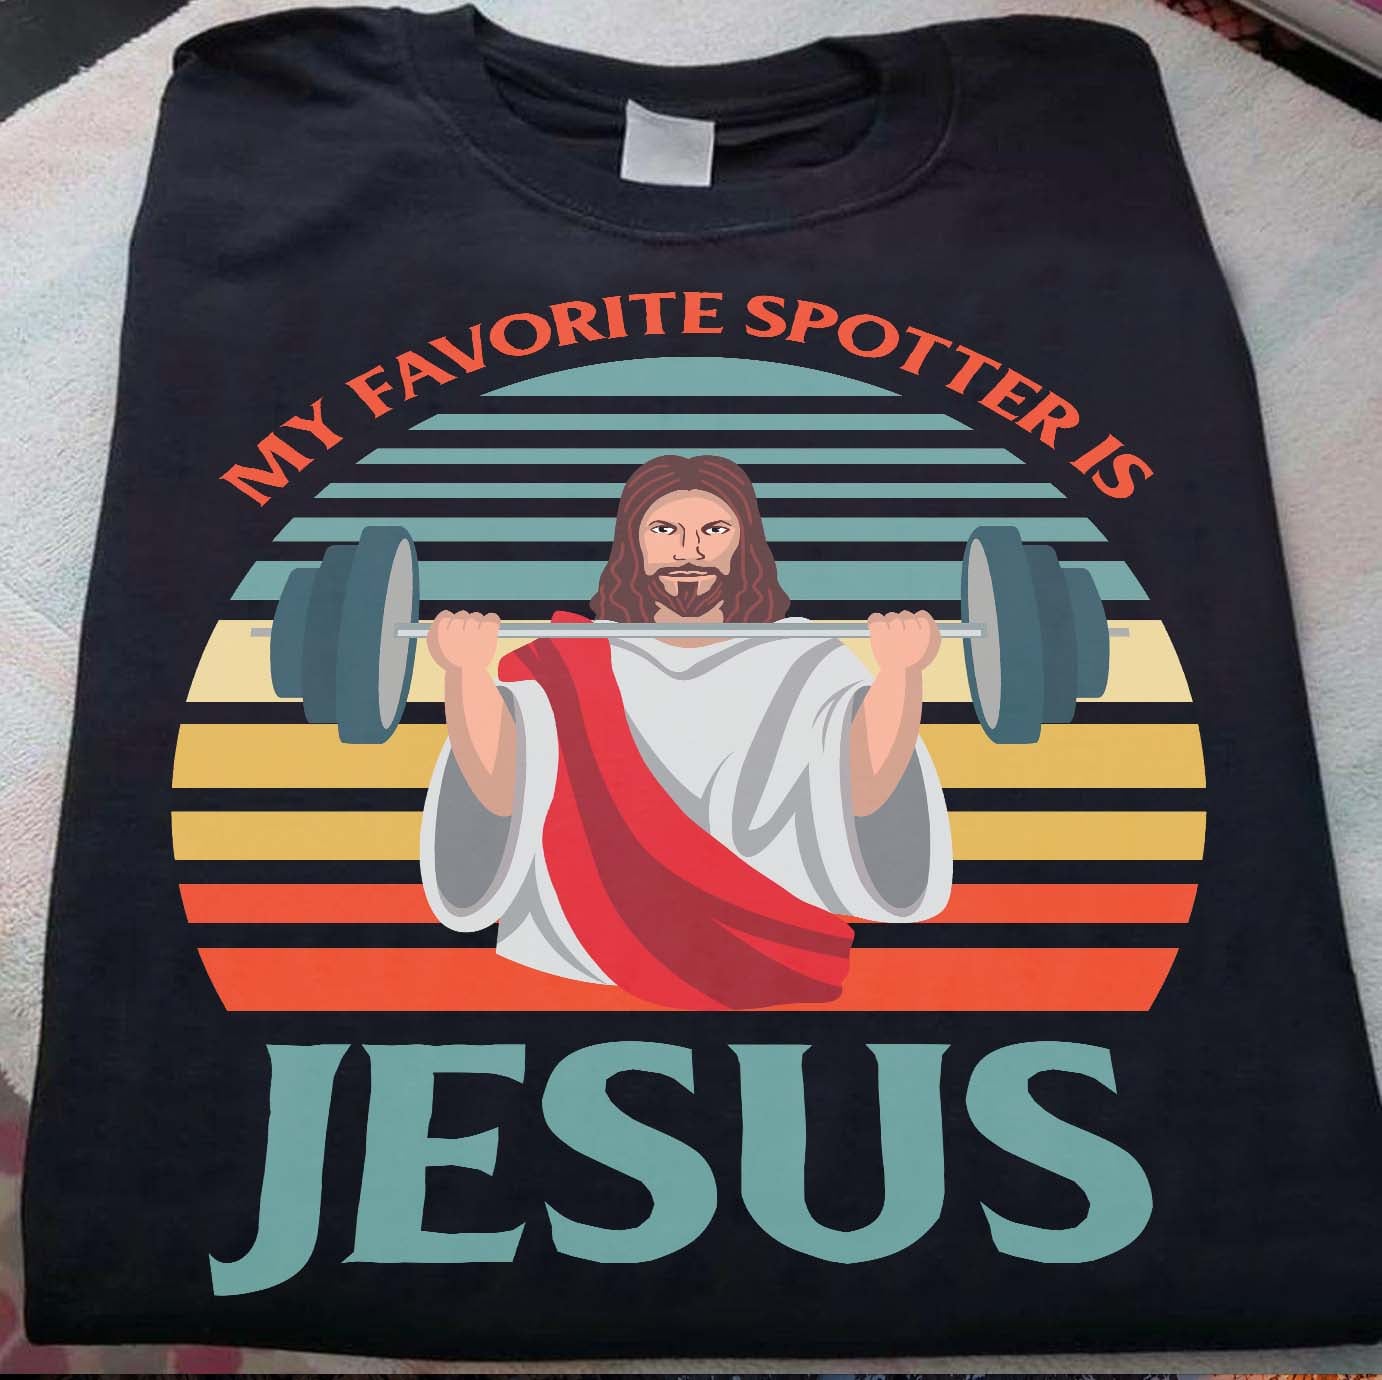 My favorite spotter is Jesus - Jesus lifting